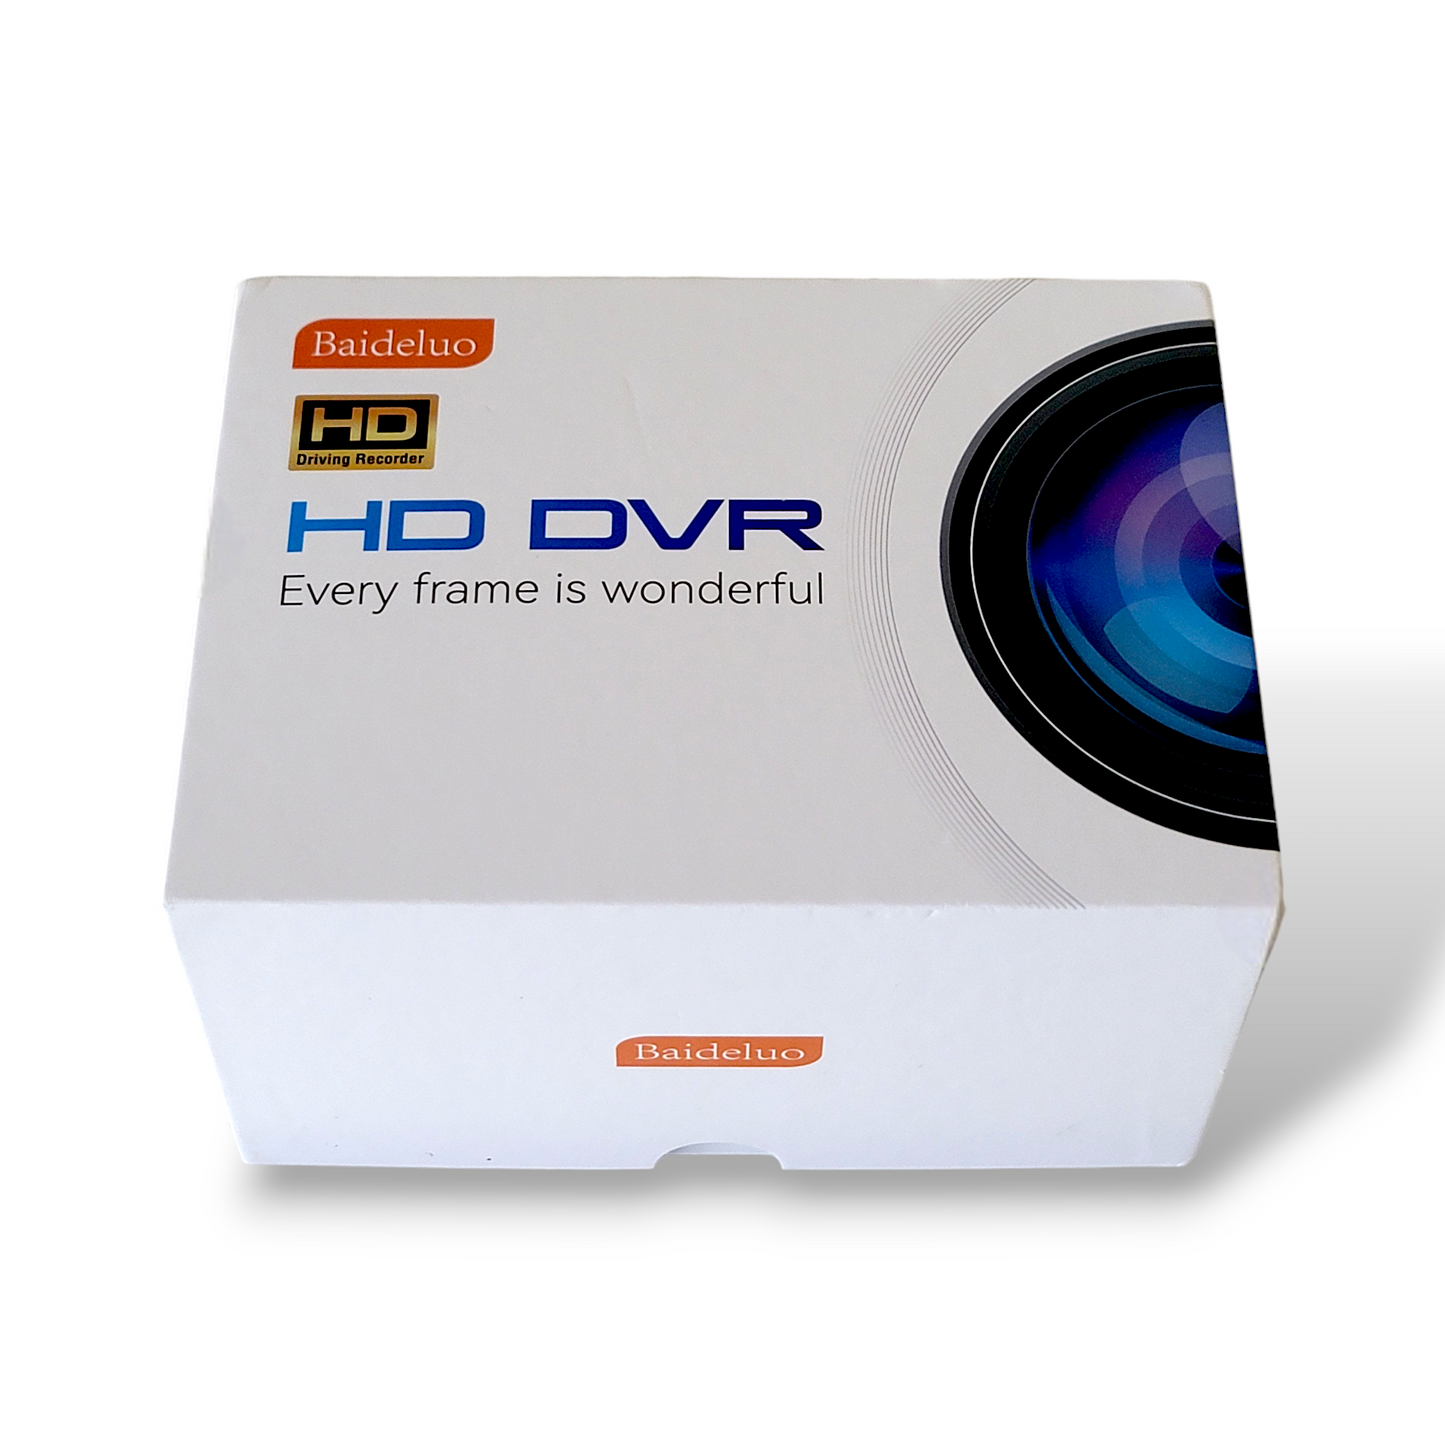 1080p Dashcam 32GB memory card 3 Cameras With IR Night Vision Loop Recording 2 inch IPS Screen - Front Rear Camera